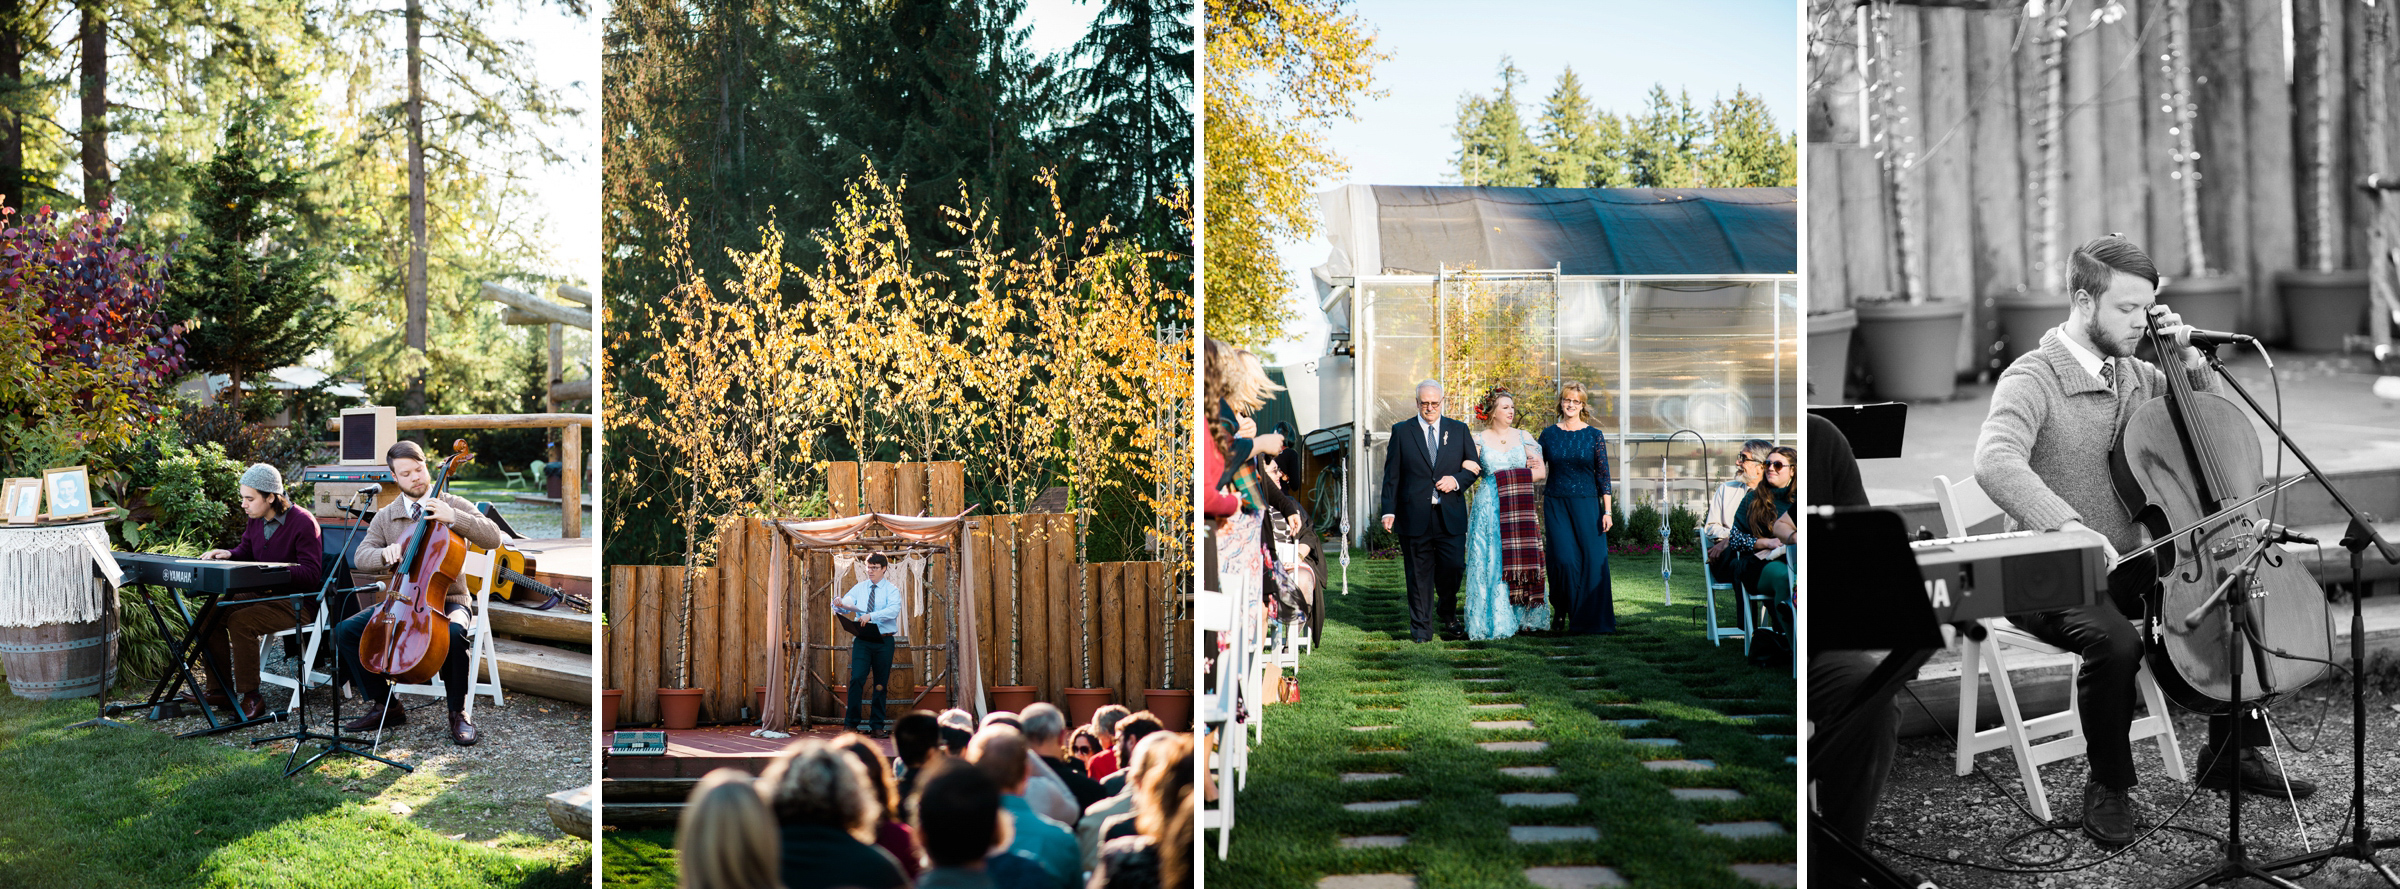 22-Black-Diamond-Gardens-Wedding-Seattle-Photographer-Fall-Autumn-Ceremony